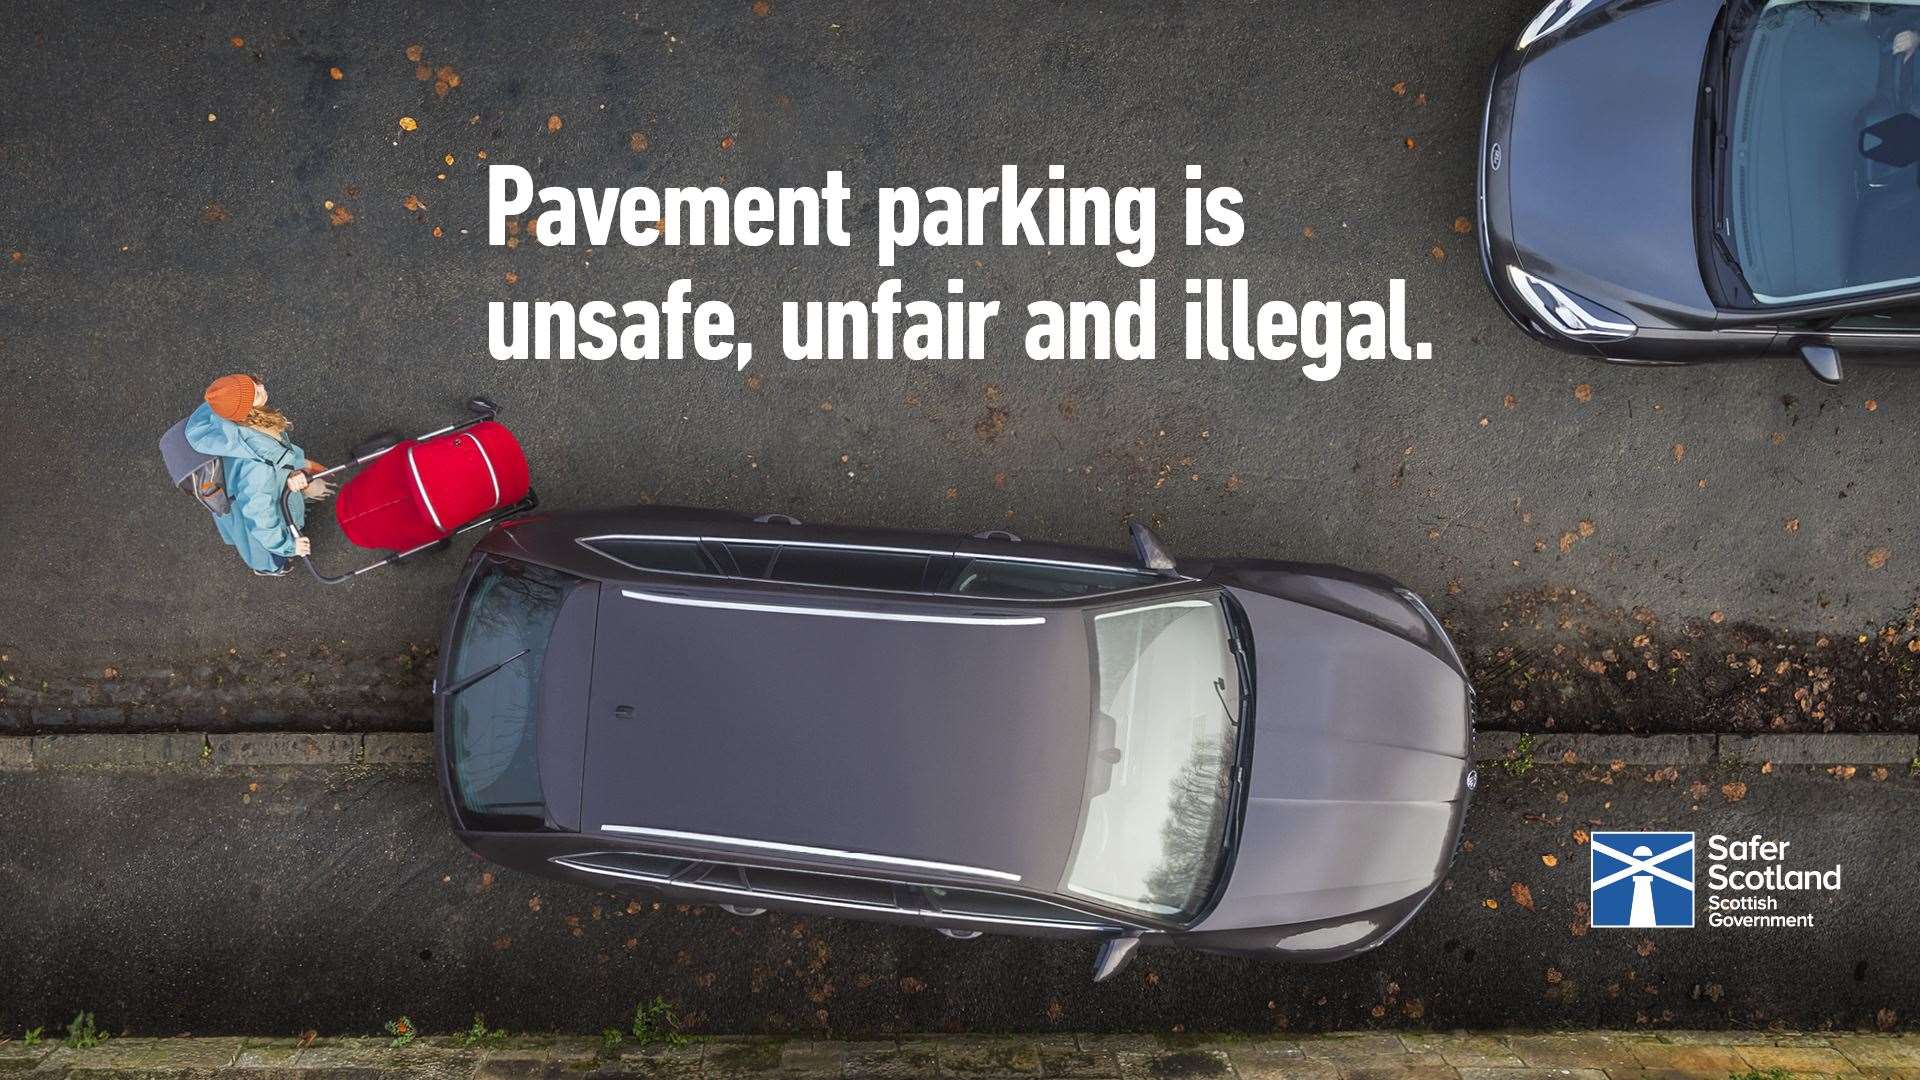 A ban on pavement parking starts on Monday.